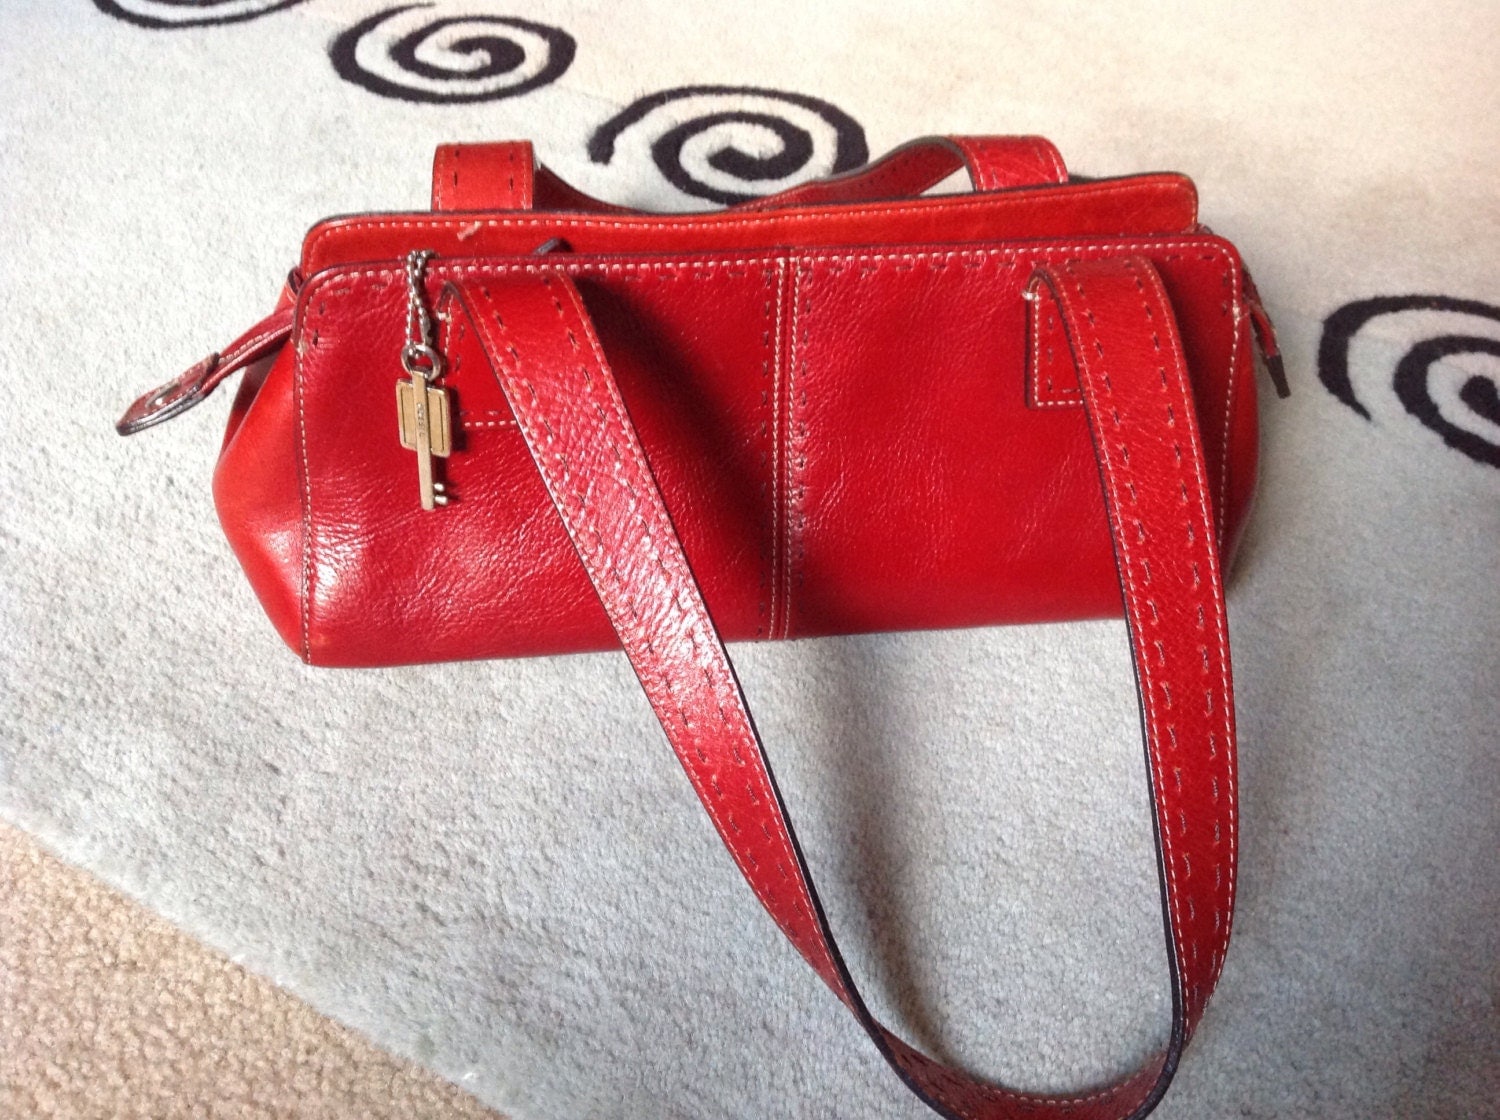 Fossil pursevintage fossil handbag red leather pursered